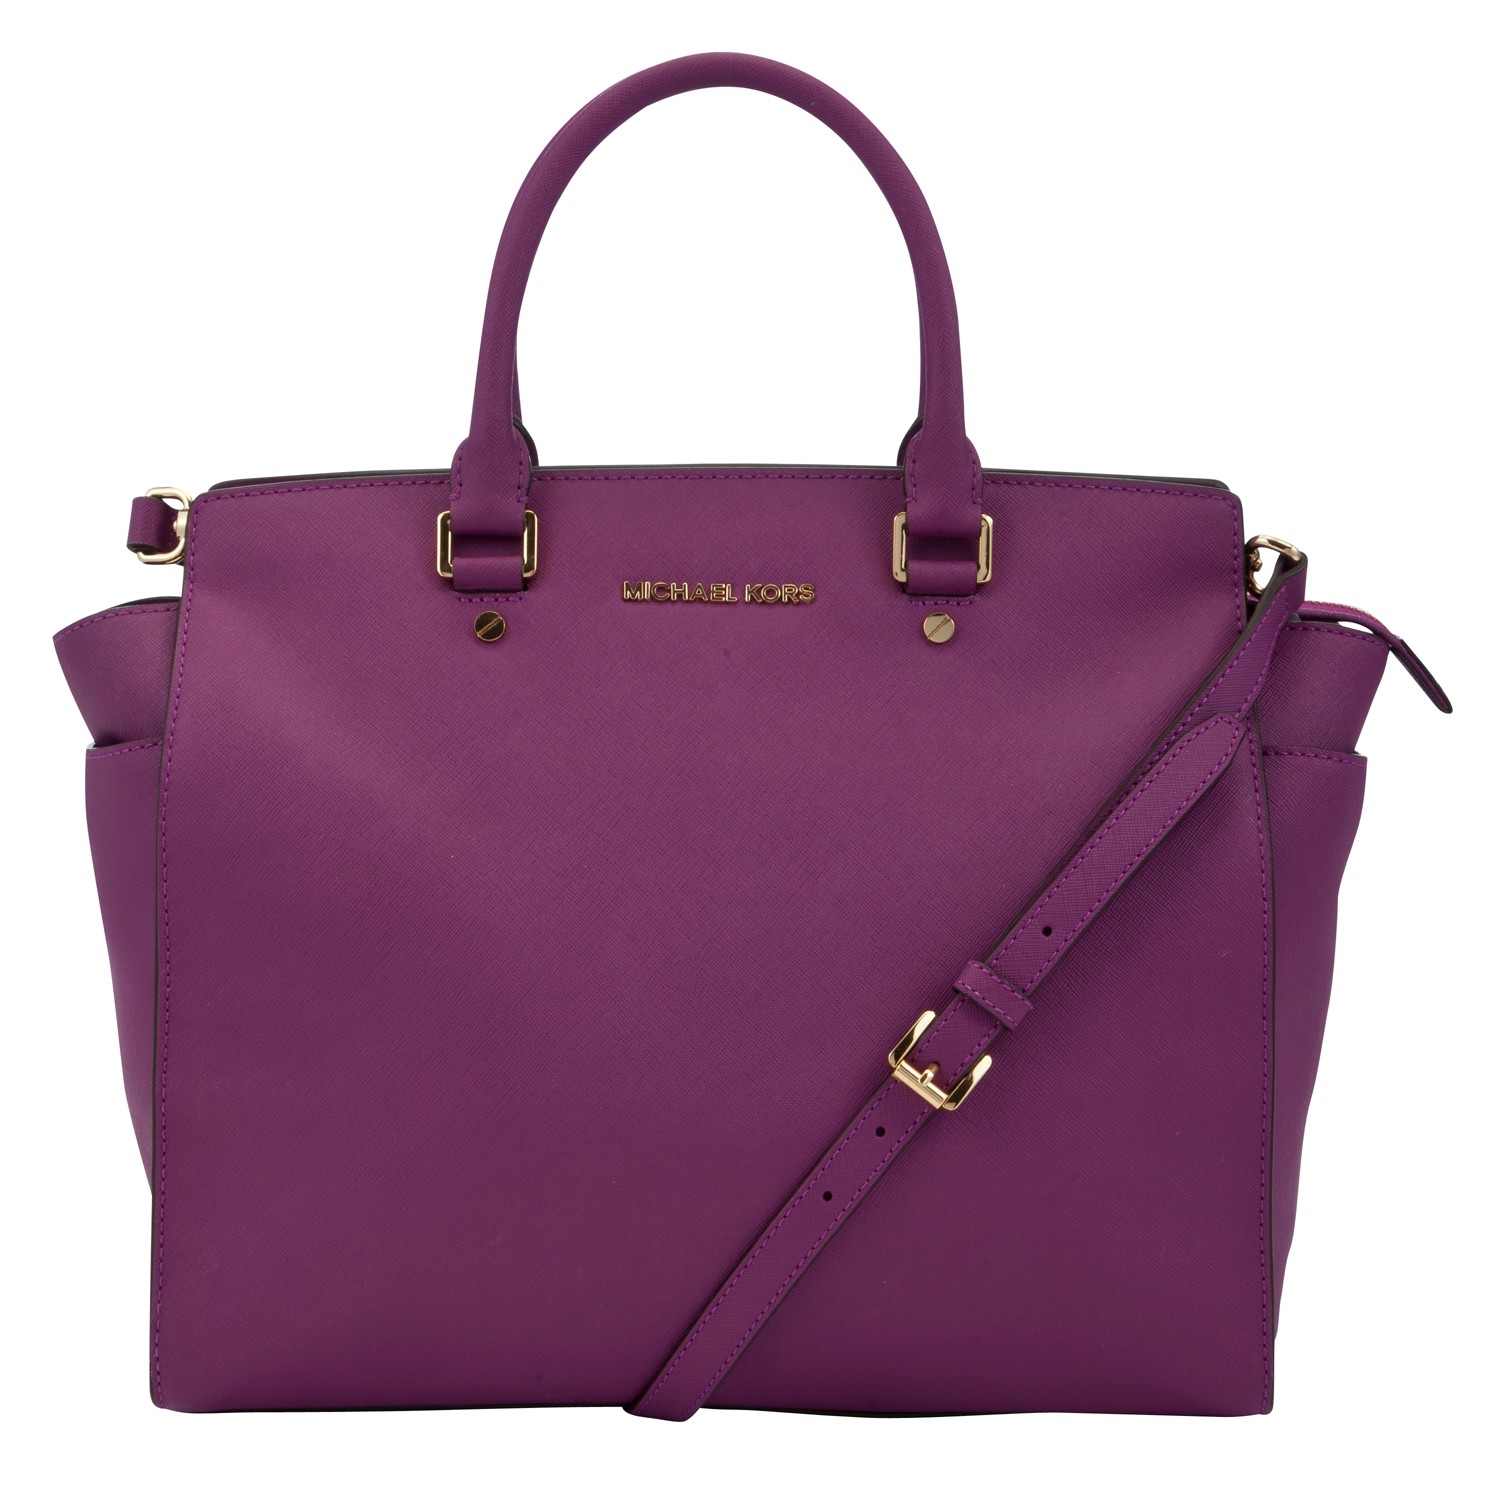 Dior Handbags At Neiman Marcus: Purple Michael Kors Handbag